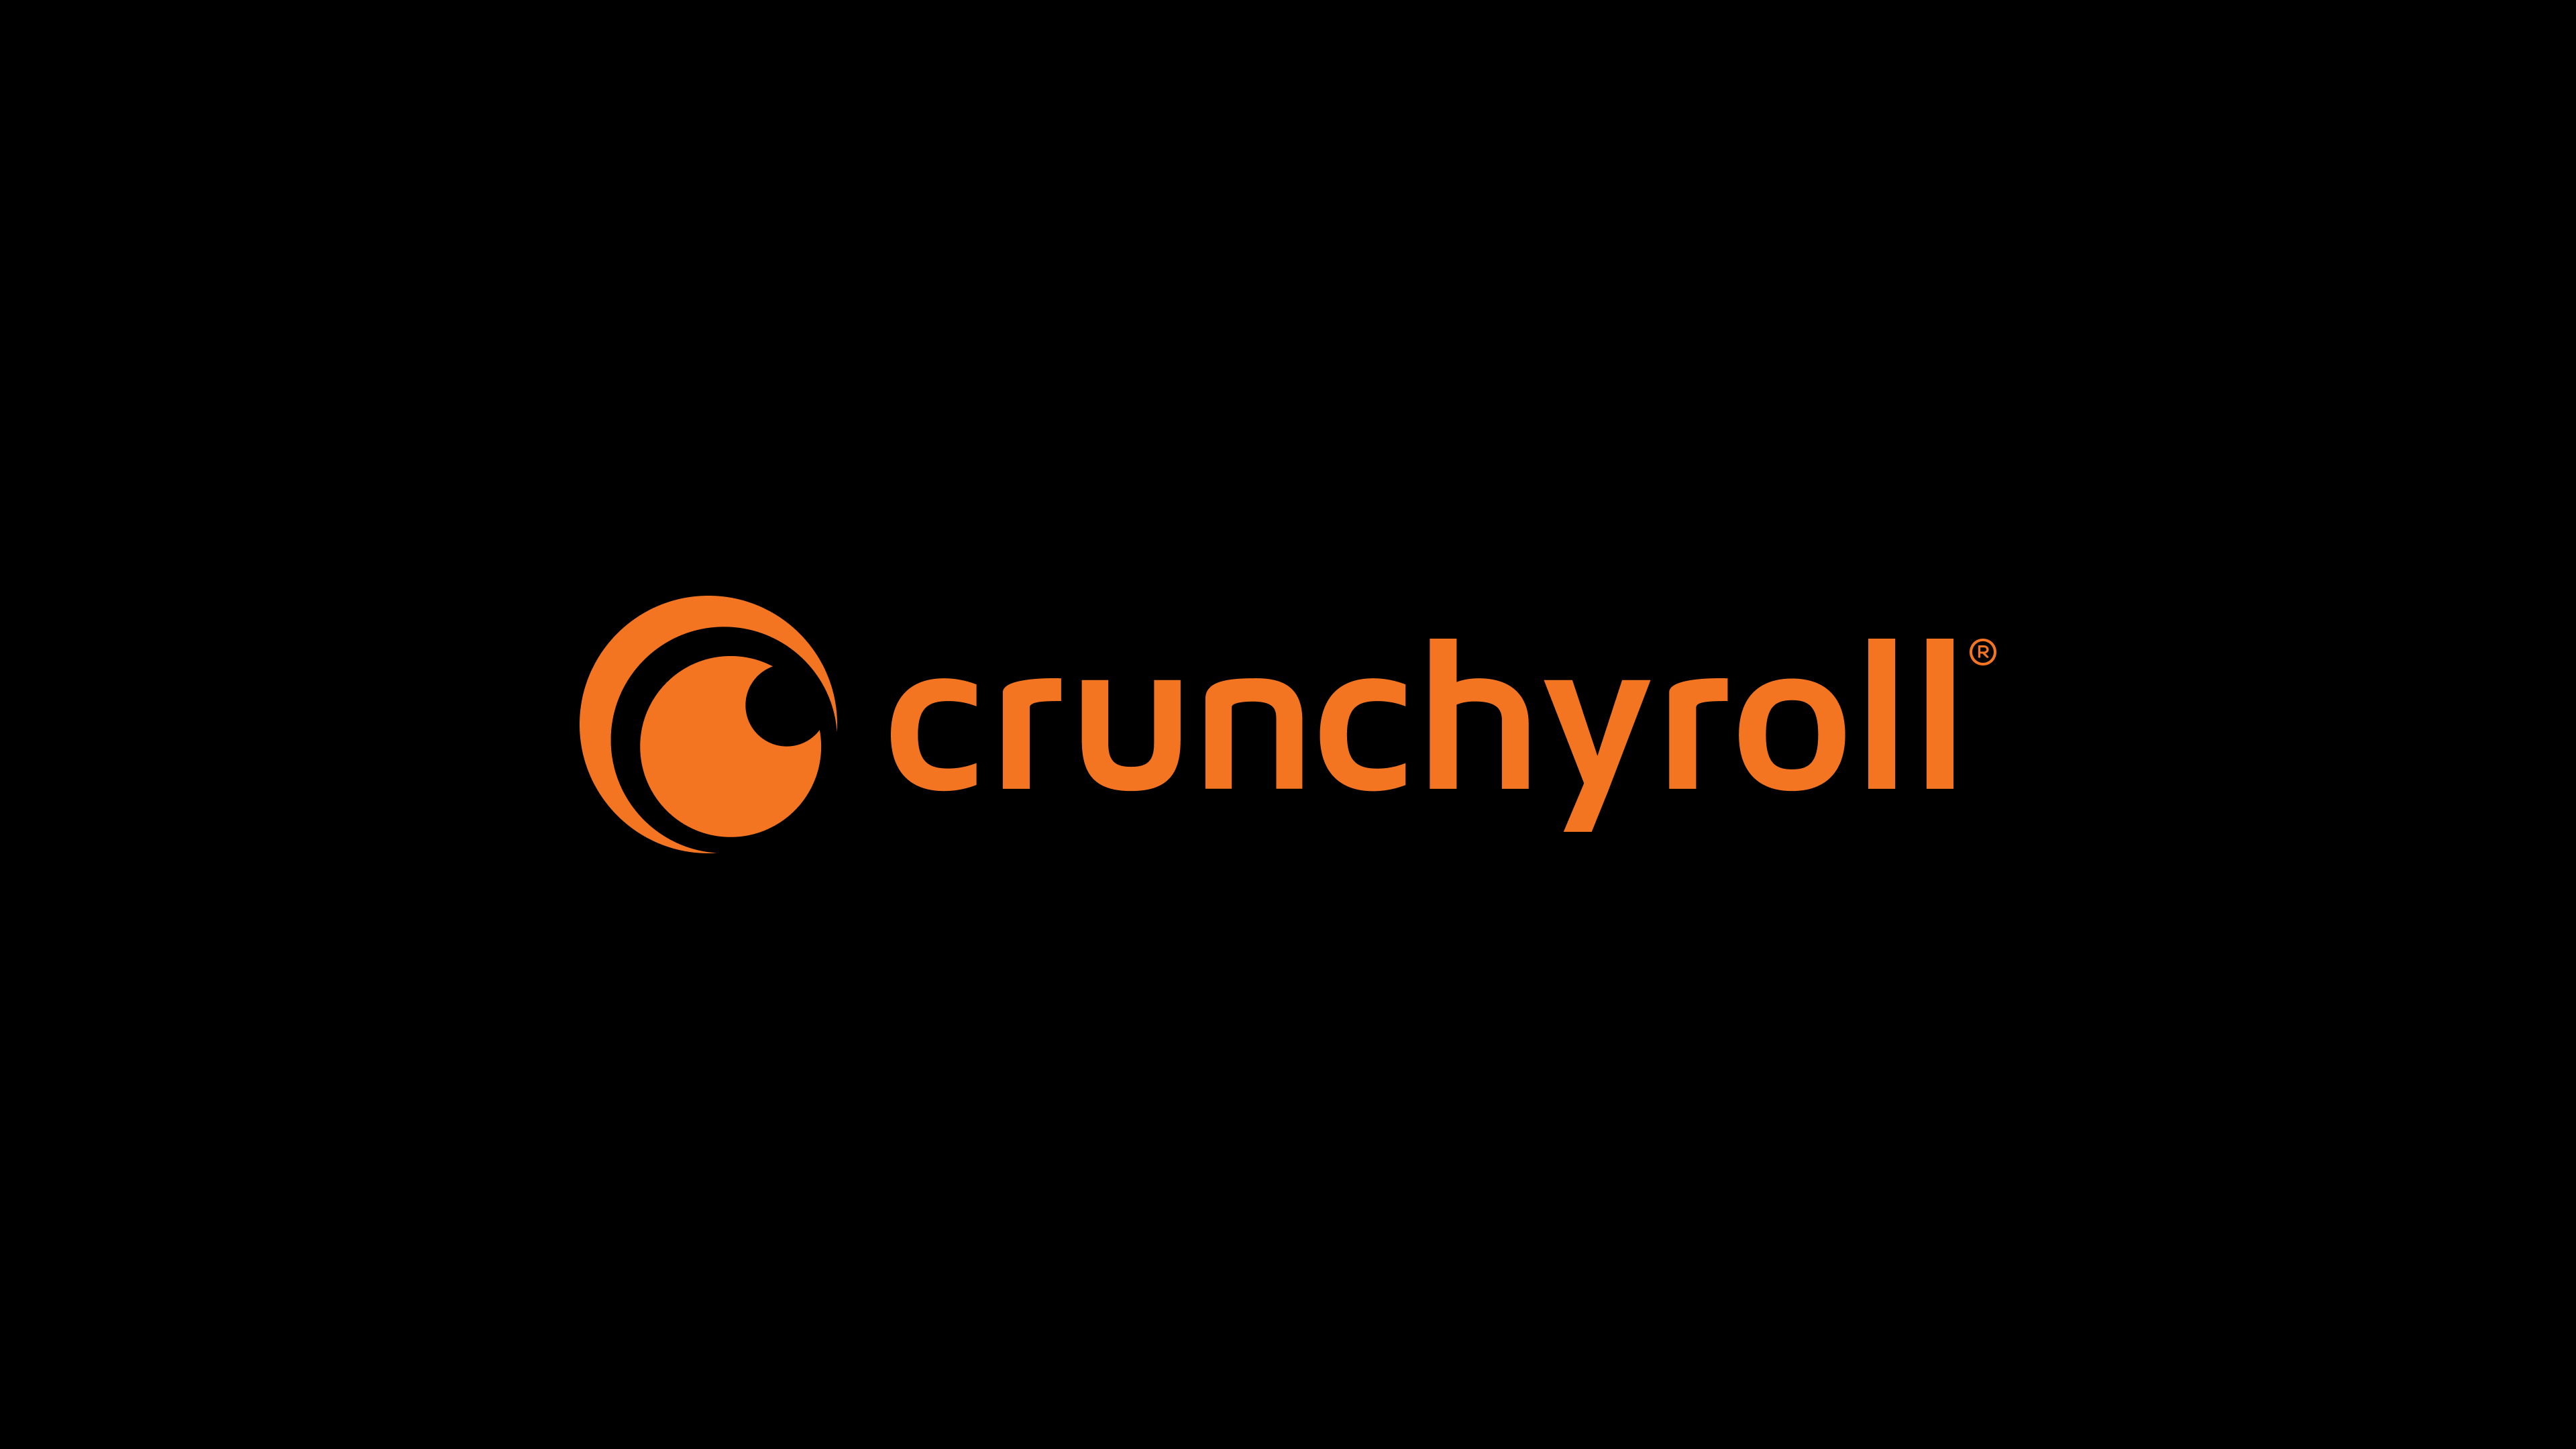 Image of Crunchyroll logo